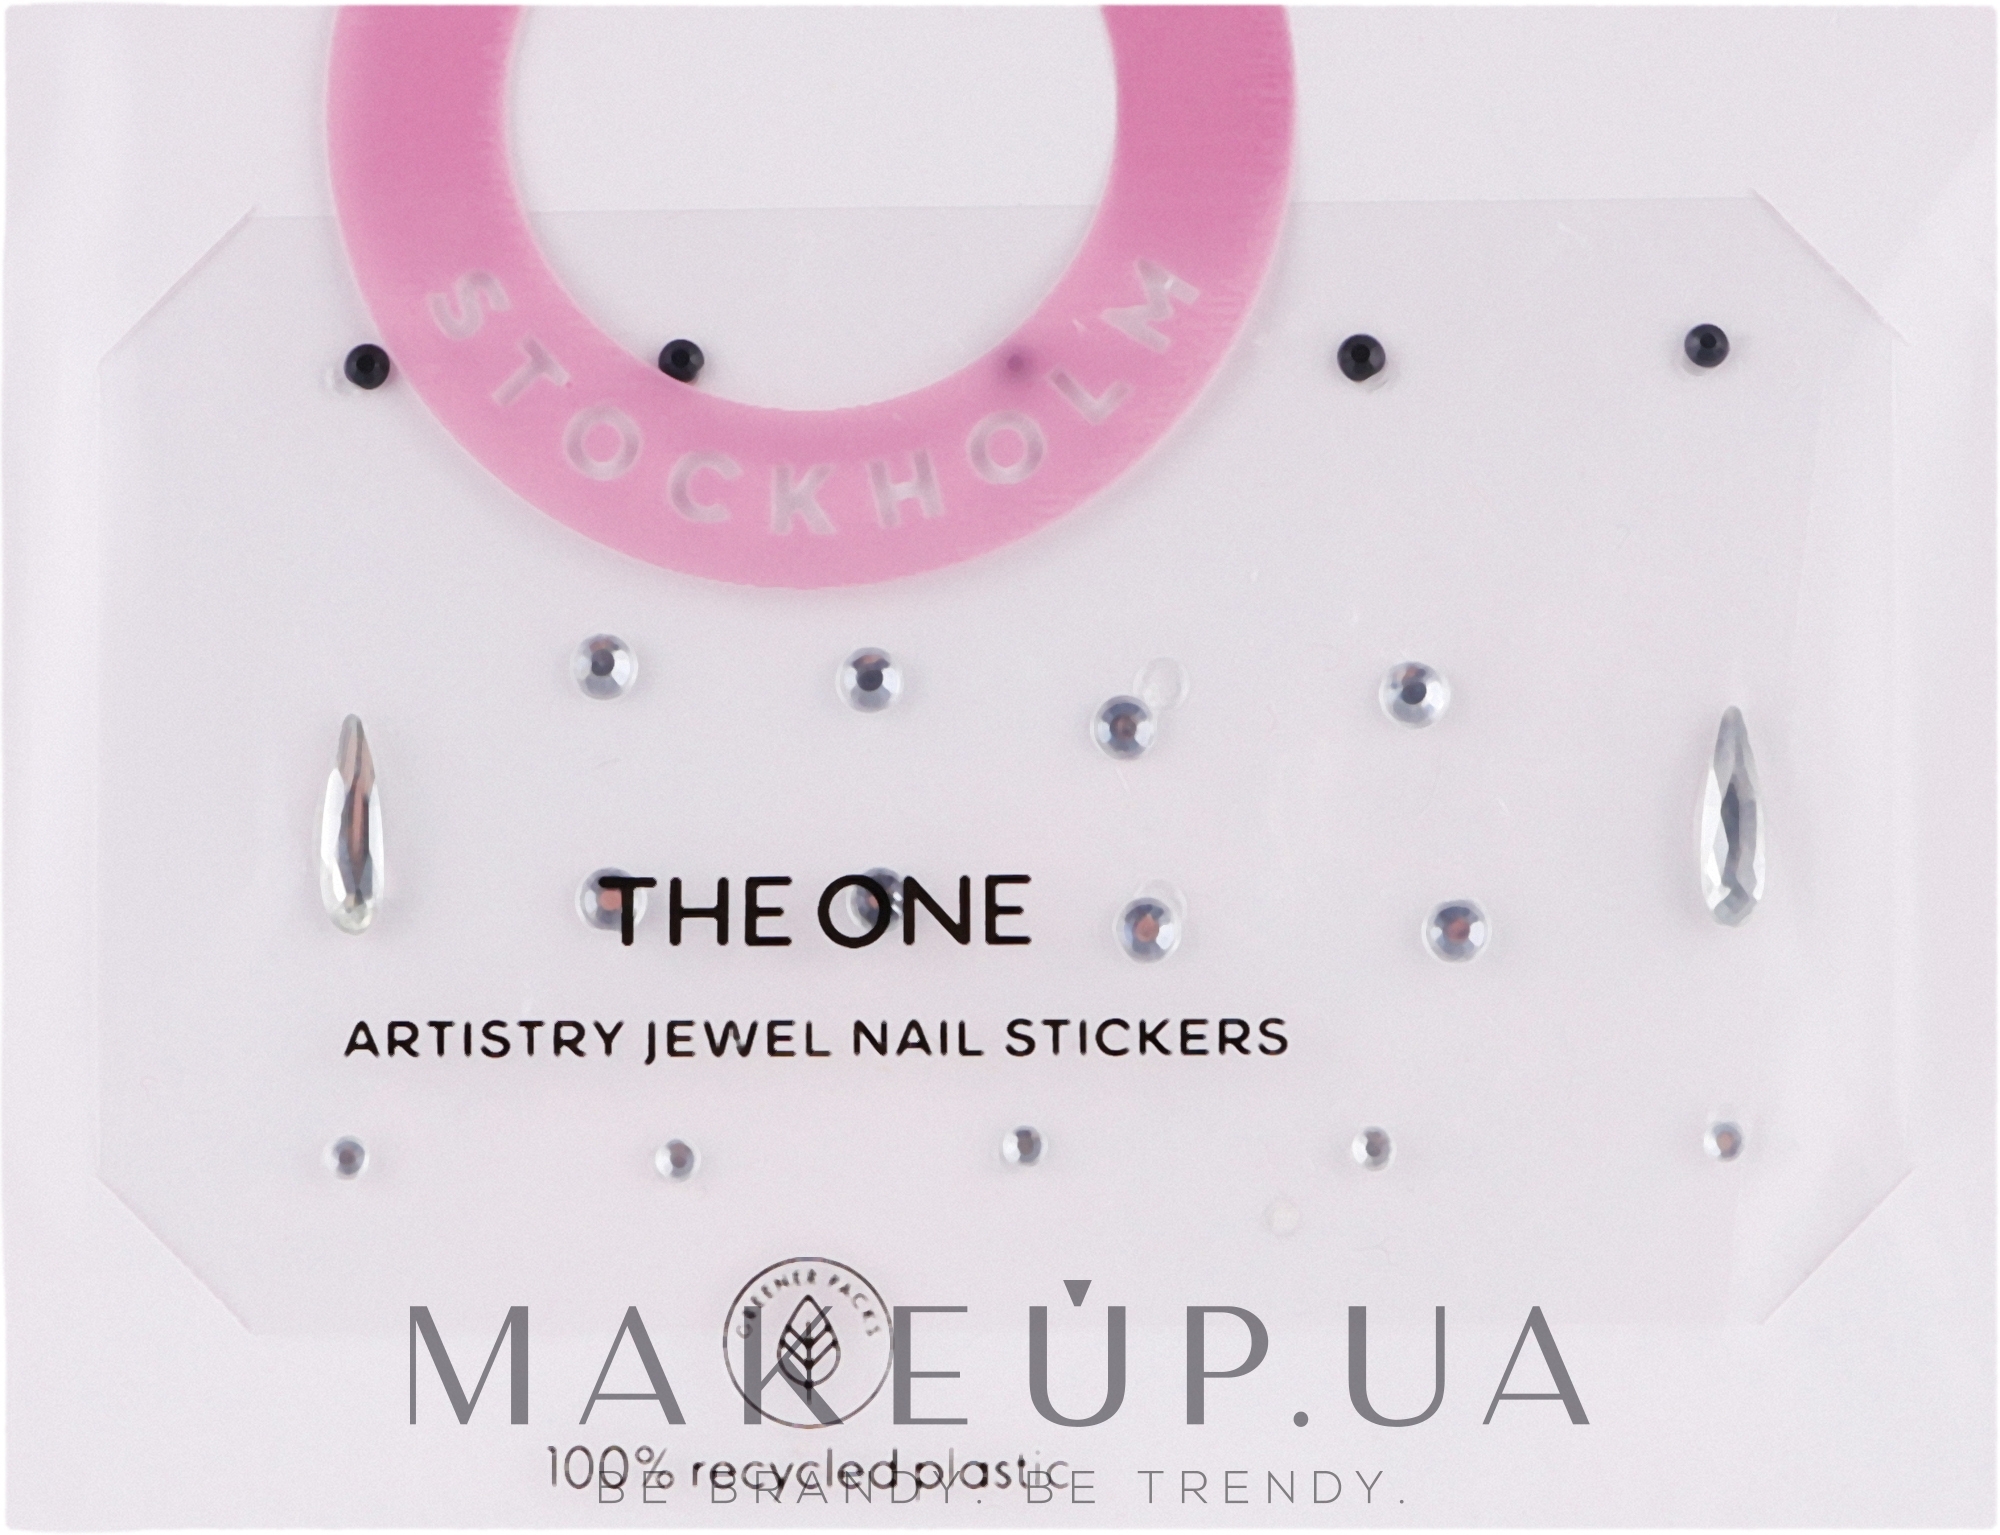 Наклейки для дизайна ногтей, 20 шт. - Oriflame The One Artistry Jewel Nail Stickers  — фото 20шт